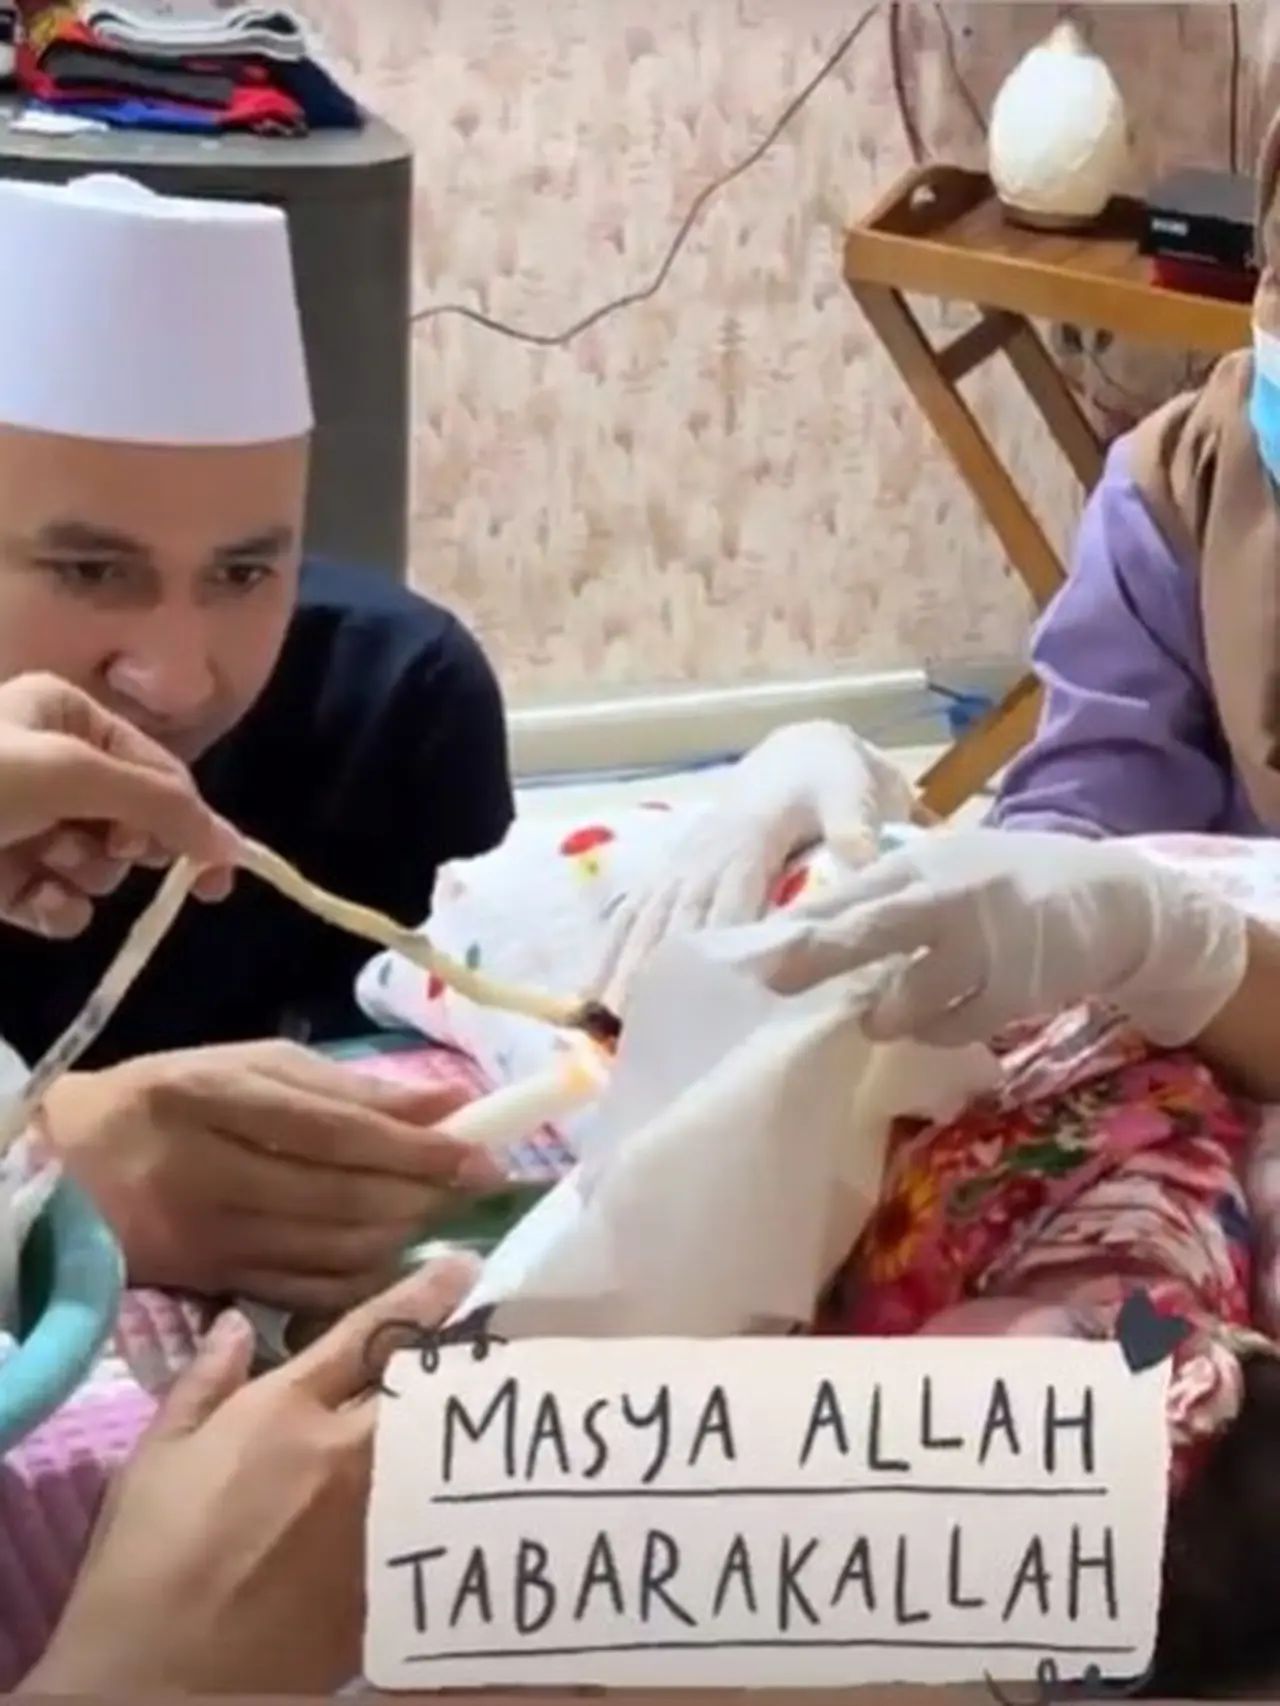 Kartika Putri's husband cutting the umbilical cord of their second child